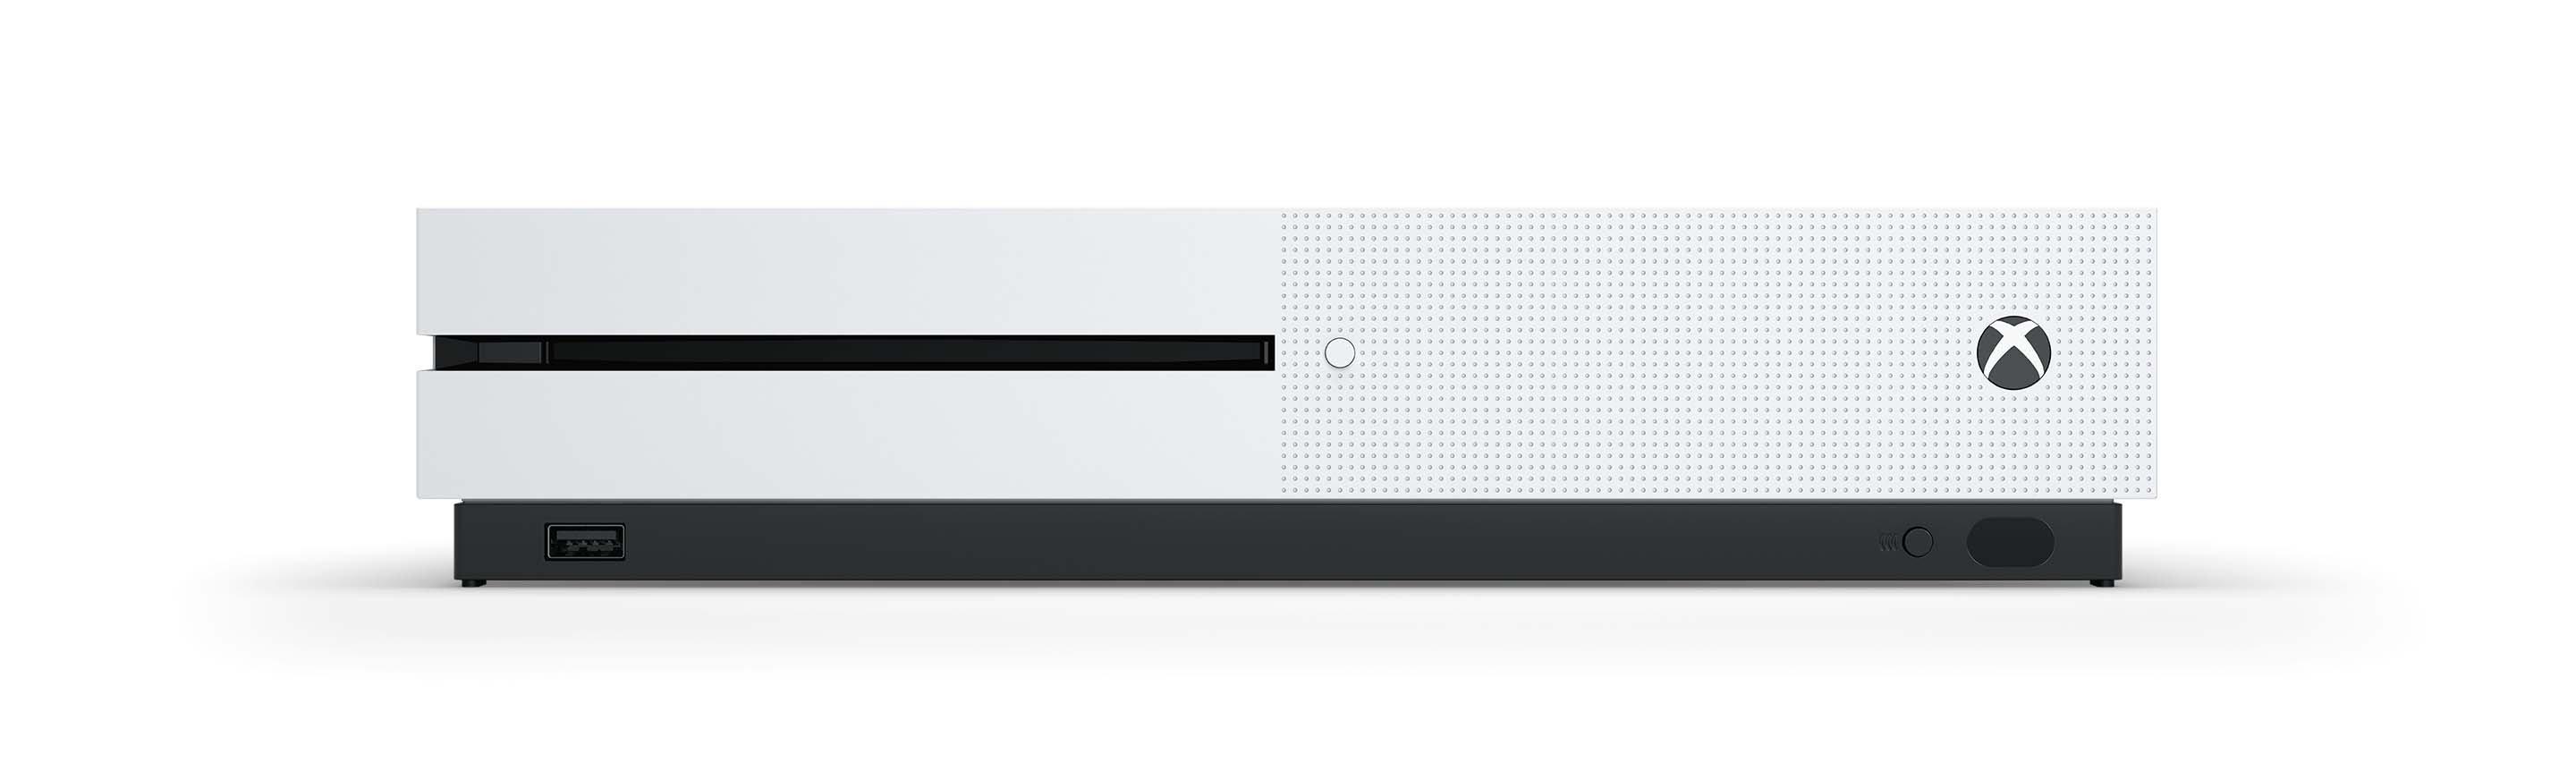 list item 4 of 6 Xbox One S White 1TB